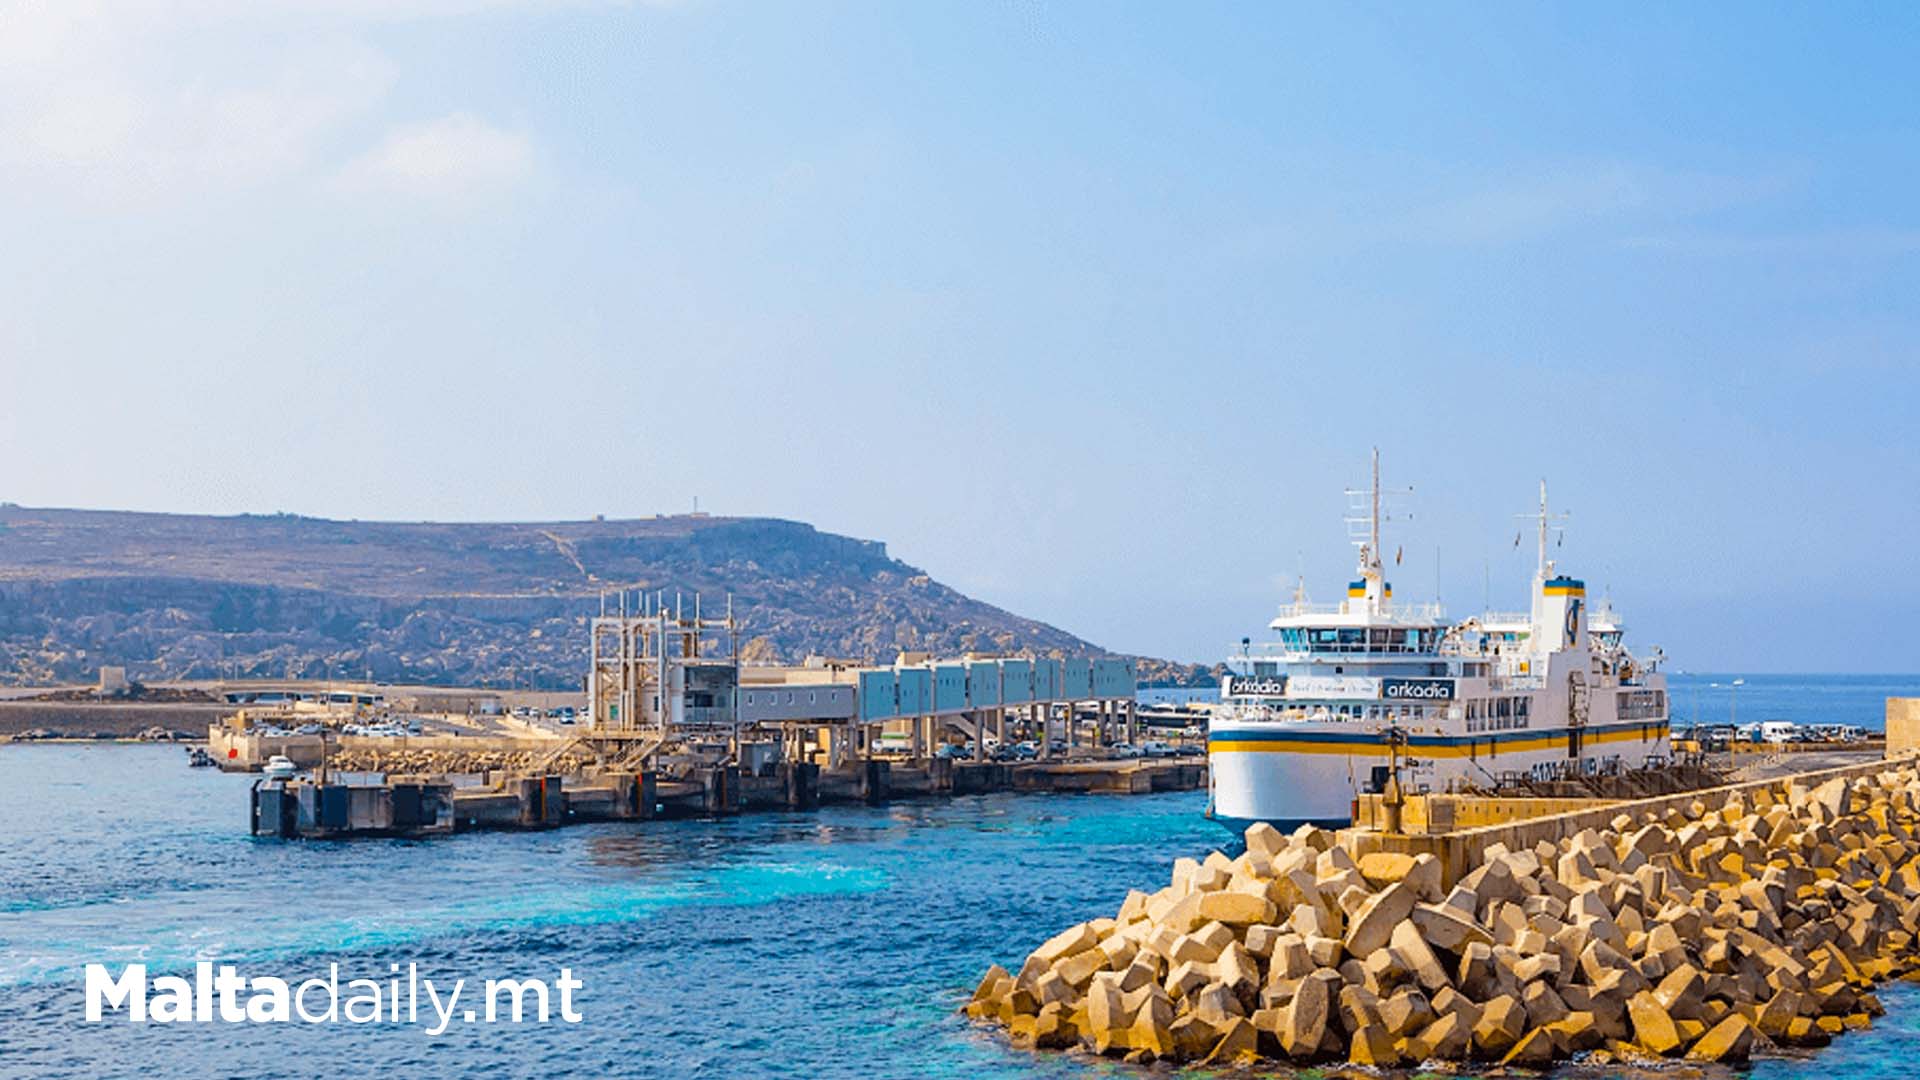 1,977,673 People Travelled Between Malta & Gozo In Q3